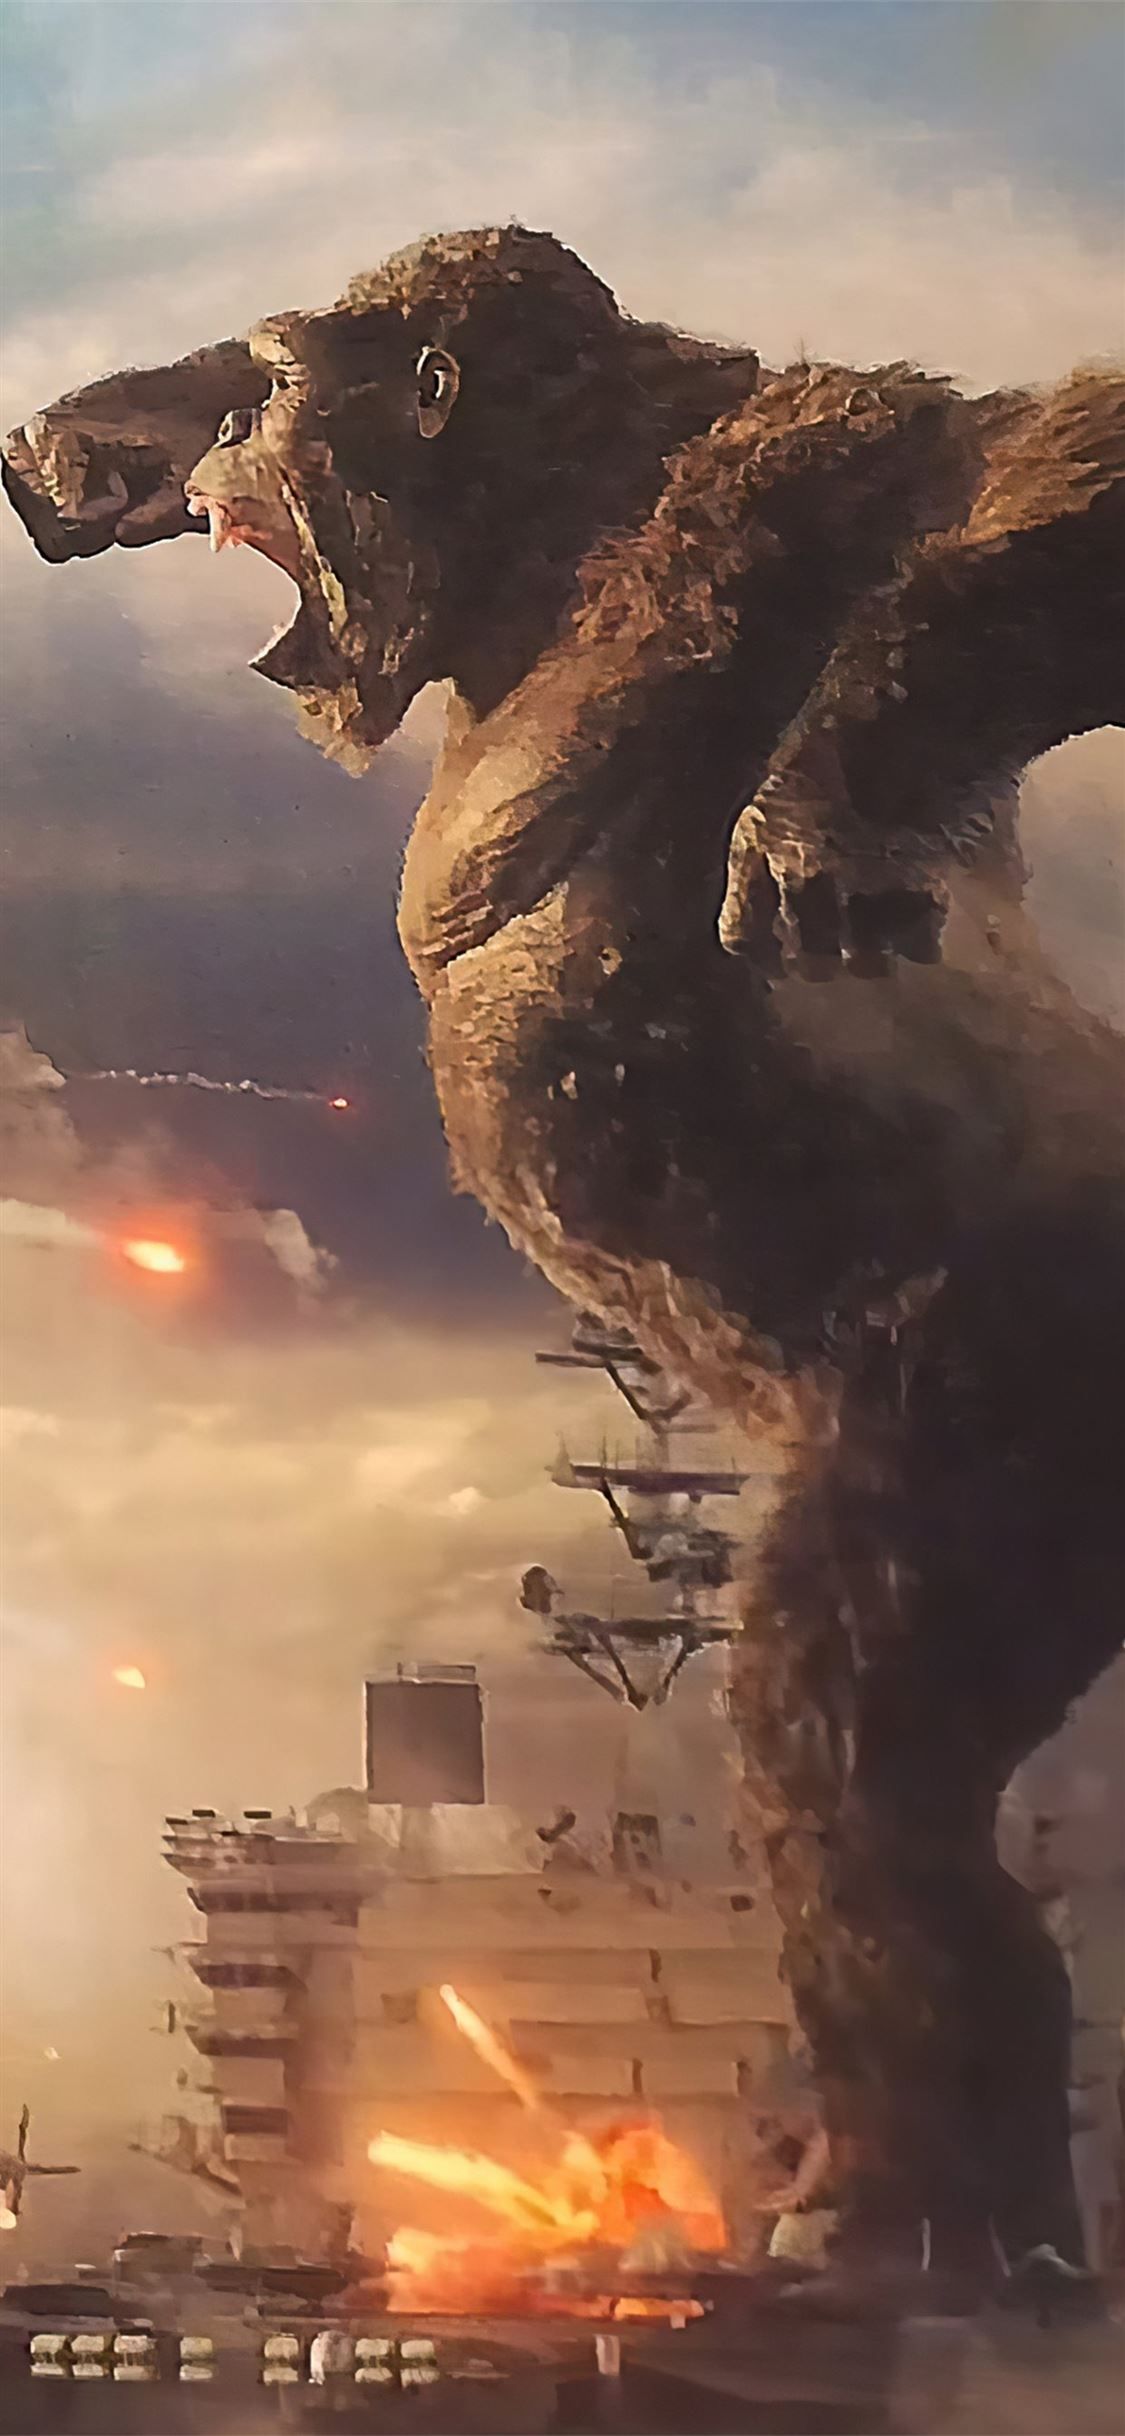 godzilla vs king kong #godzilla #KingKong #movies Movies k #iPhoneXWallpaper. Godzilla wallpaper, King kong, King kong vs godzilla